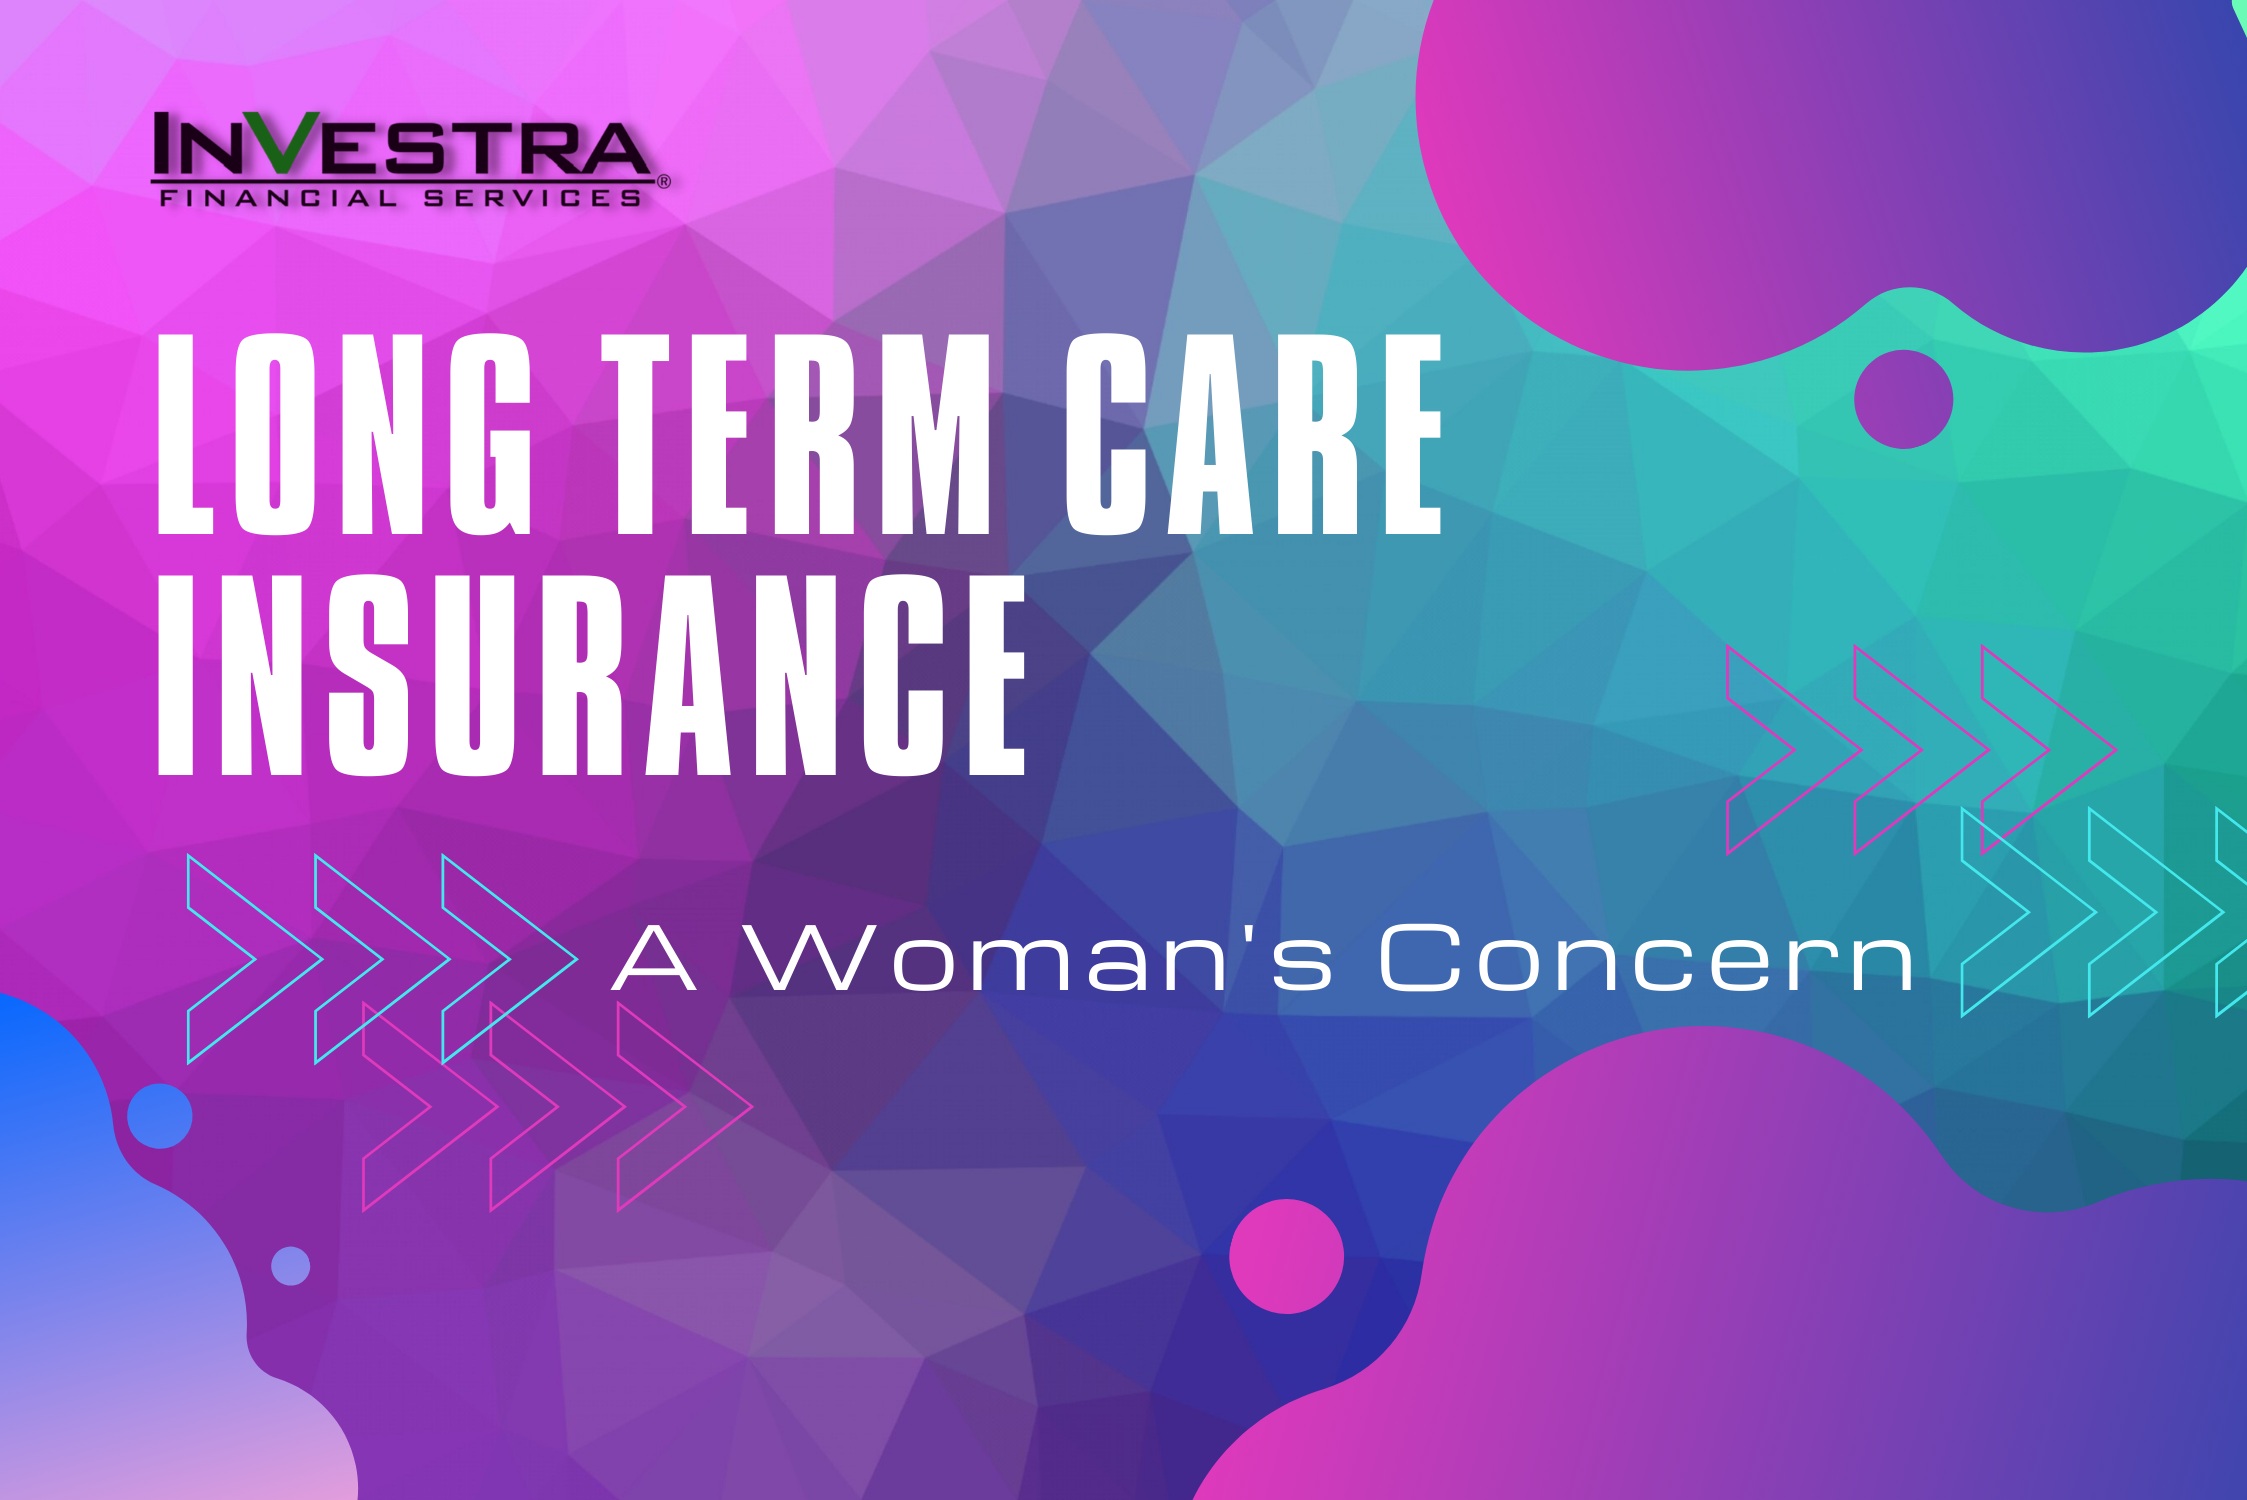 Long Term Care Insurance: A Woman’s Concern